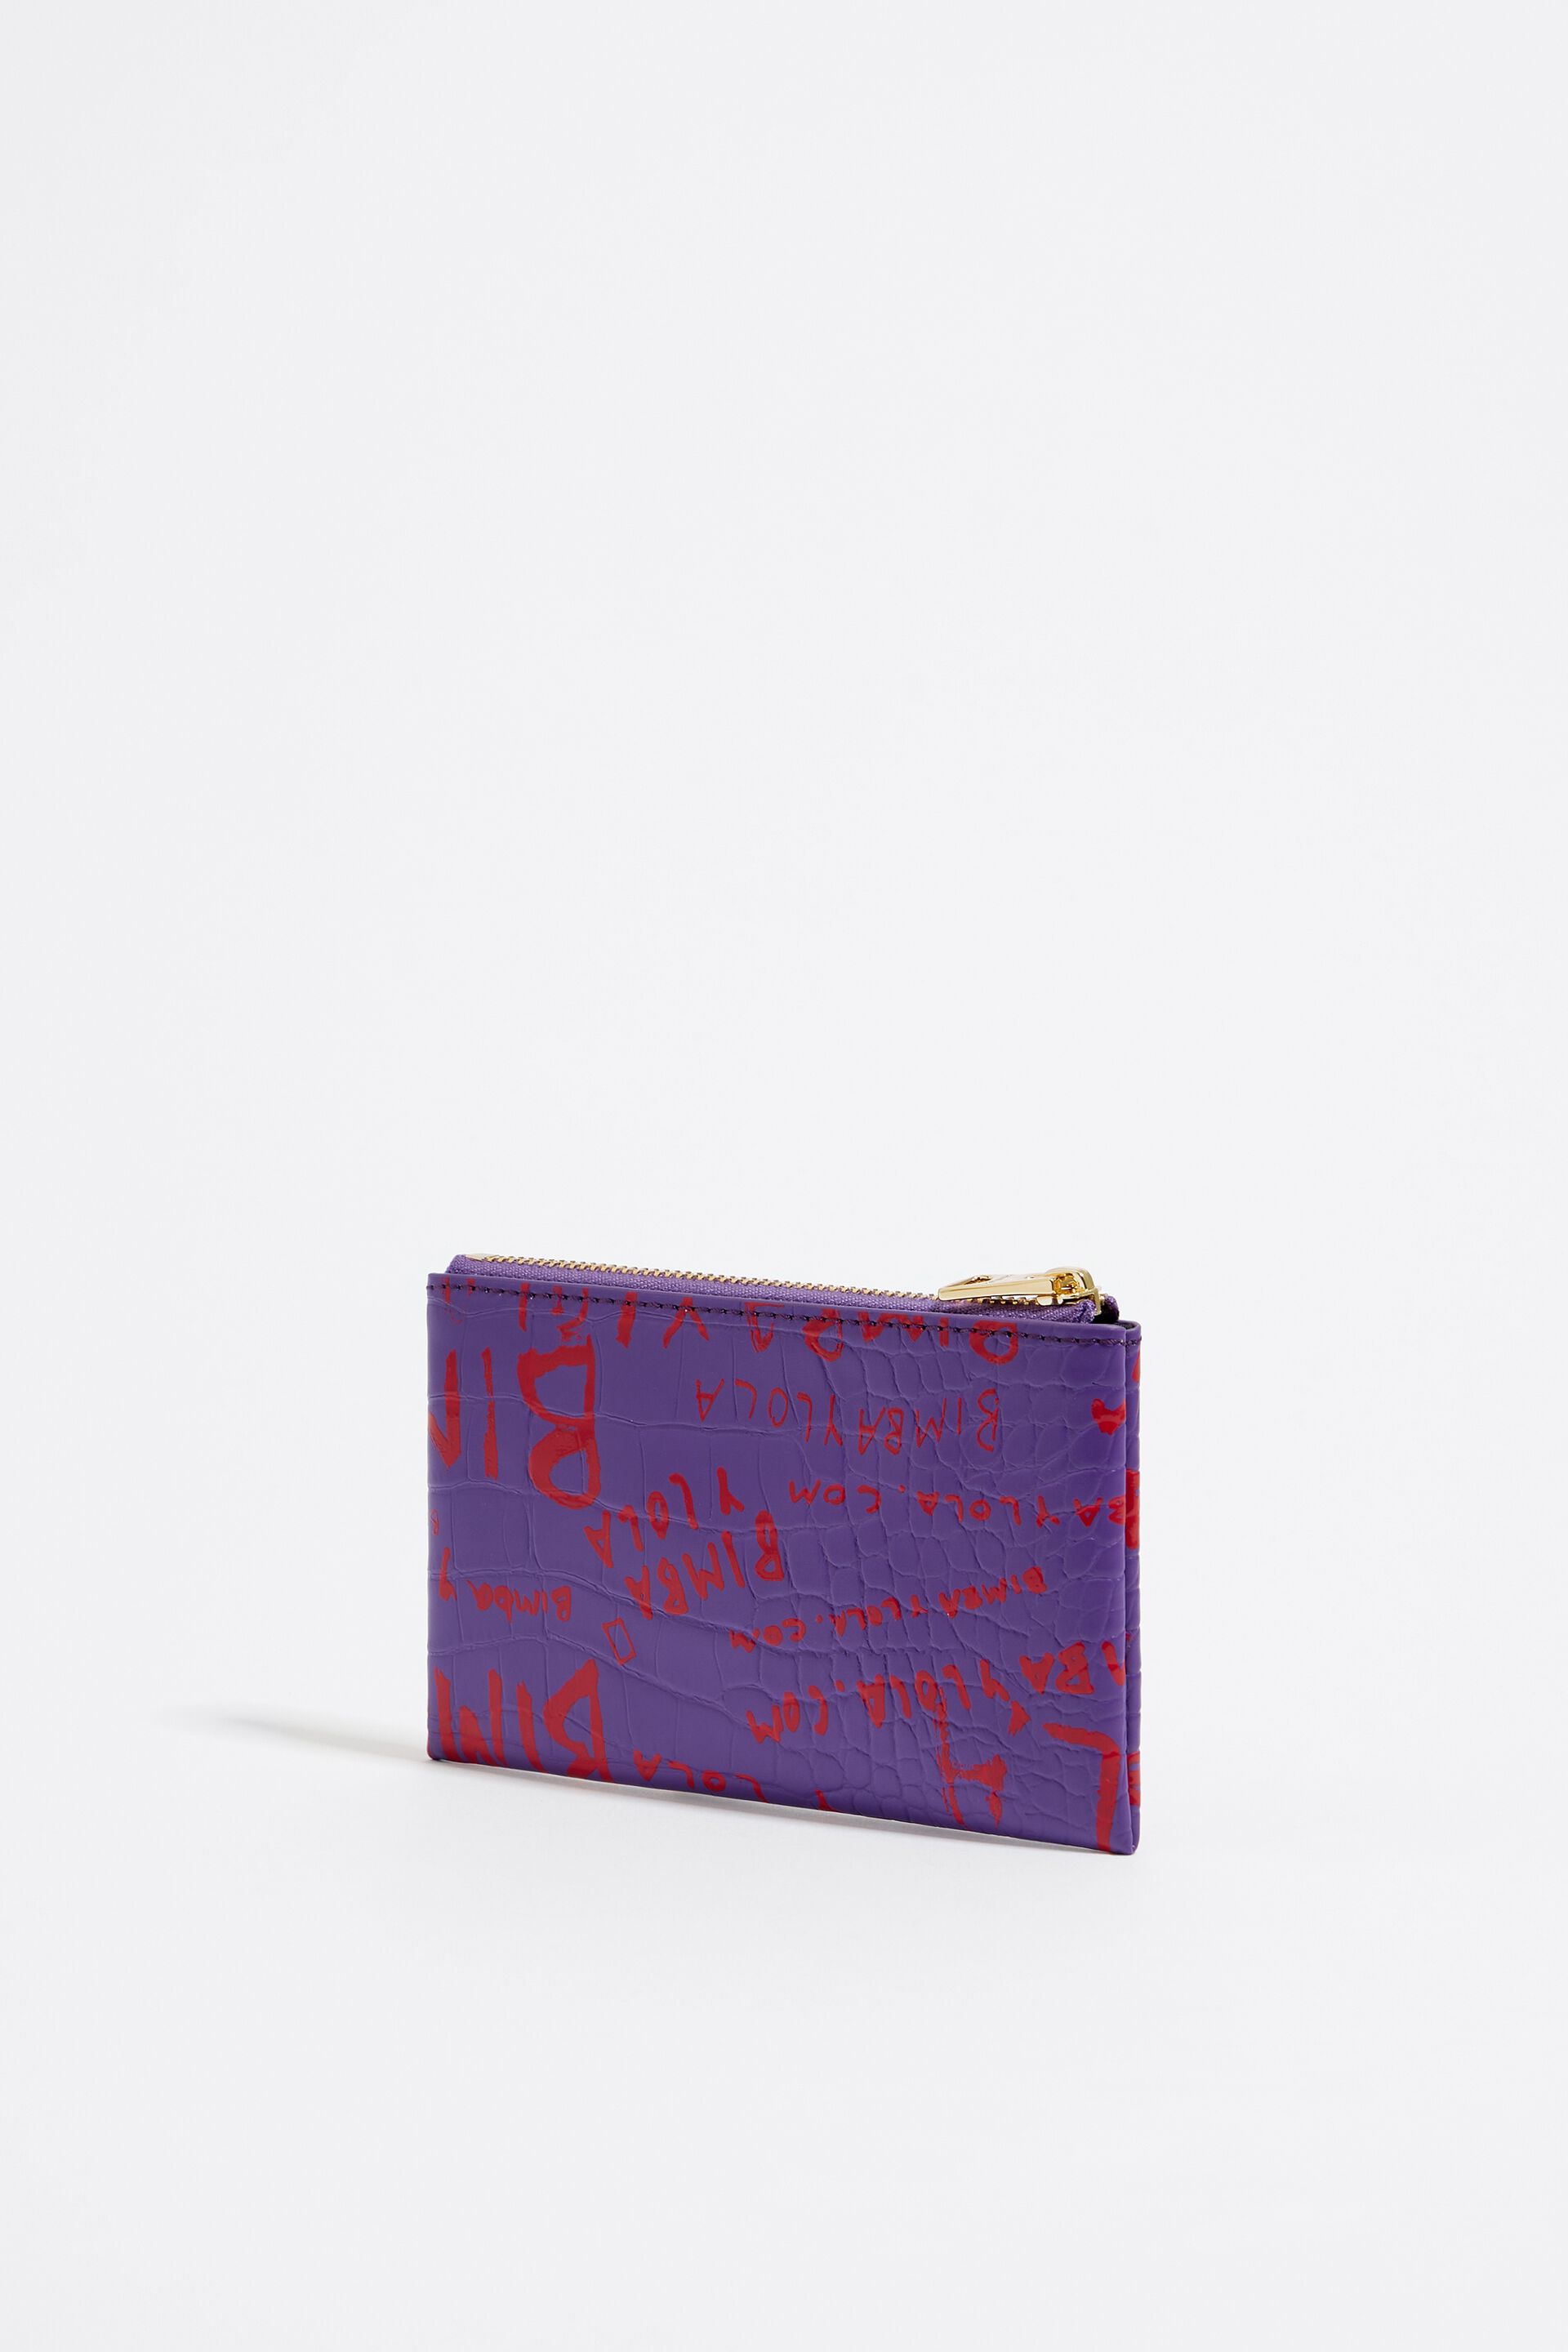 Louis Vuitton Pocket Organizer Purple in Coated Canvas - US